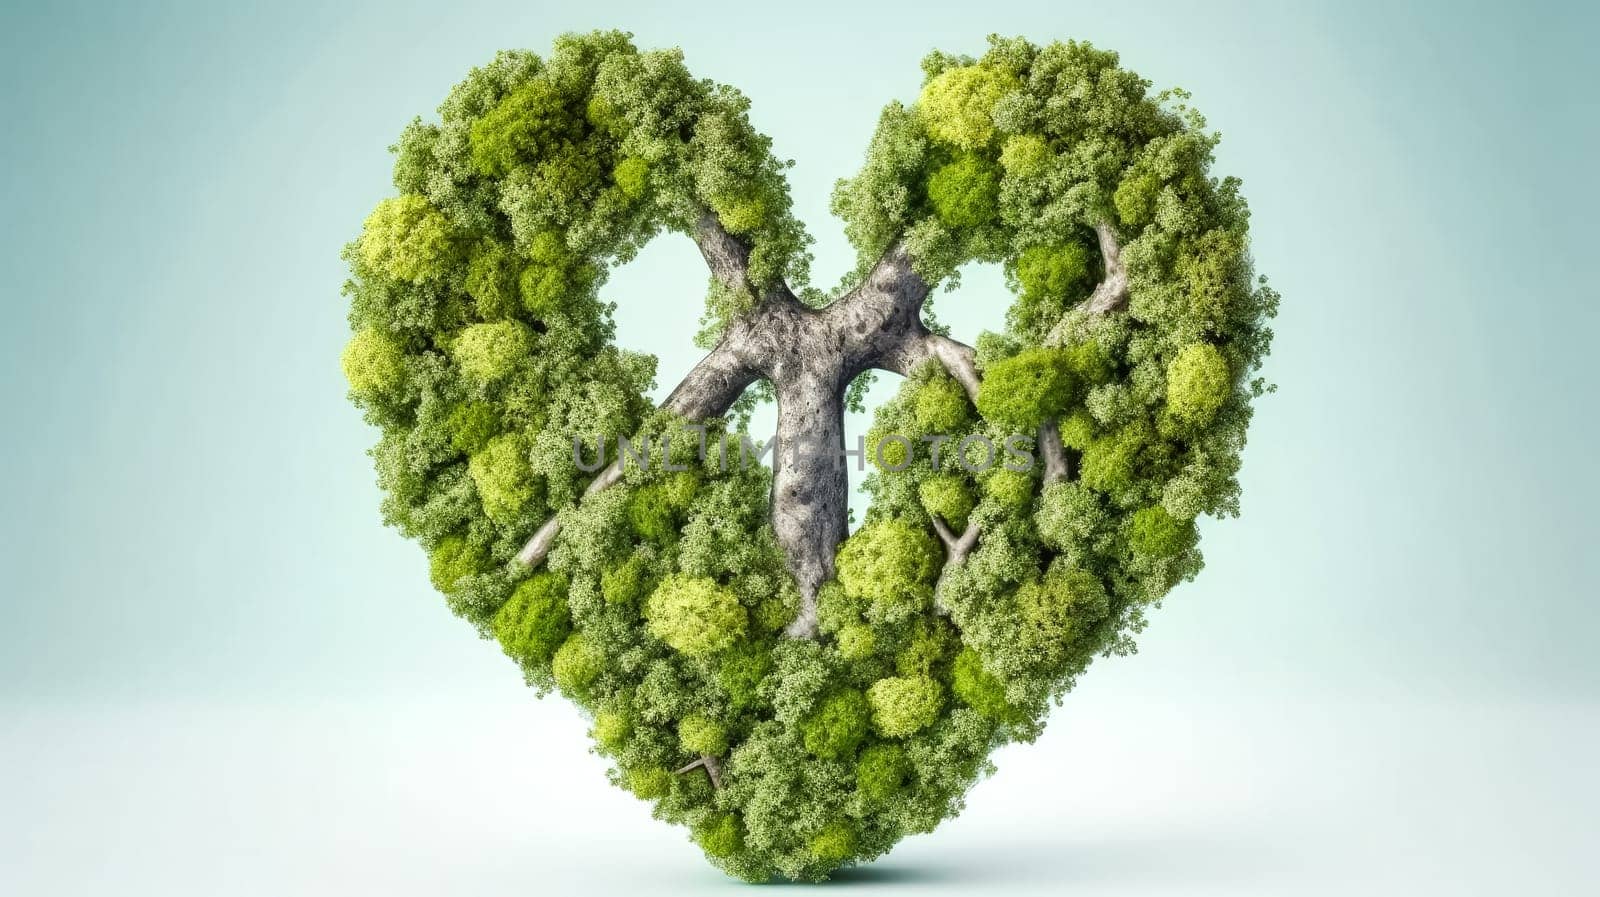 Heartbeat of the planet, A tree form heart by Alla_Morozova93